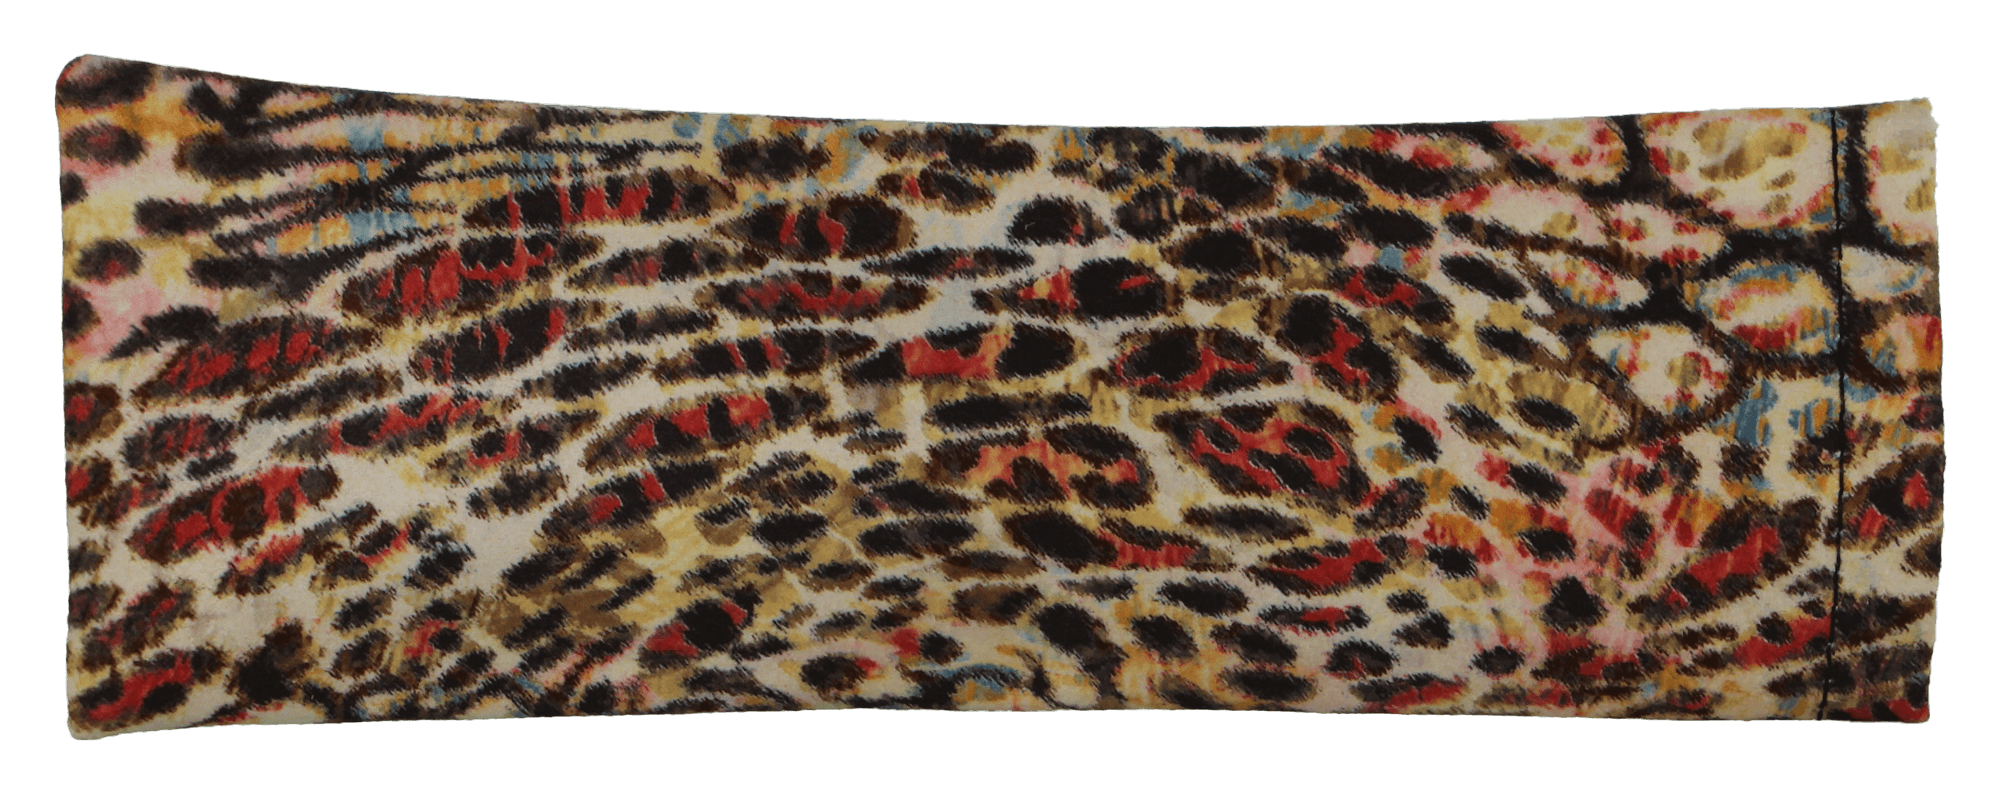 Fertiglesebrille 04891 Leoparden-Print matt +1,00 Dioptrien